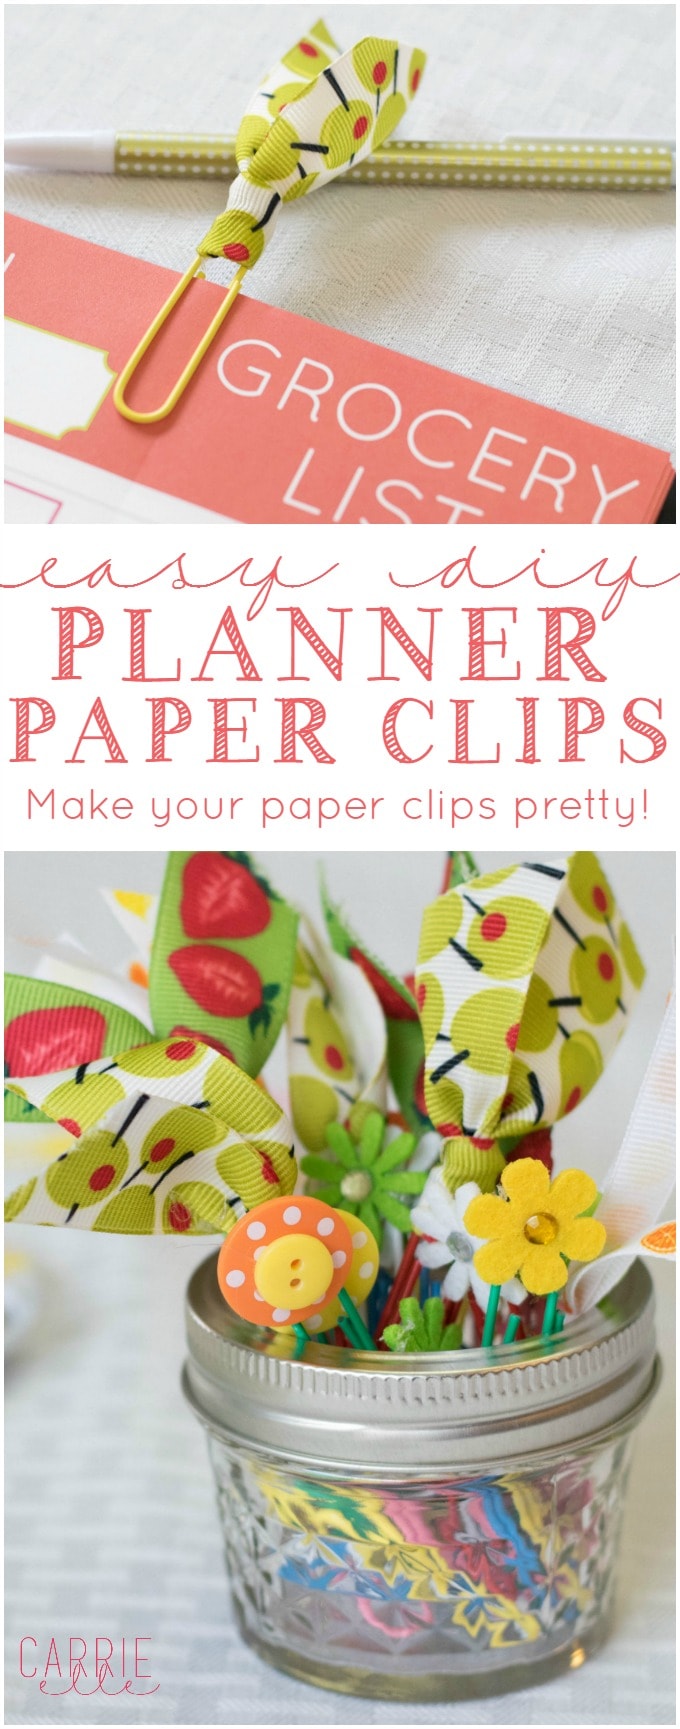 DIY Planner Paper Clips